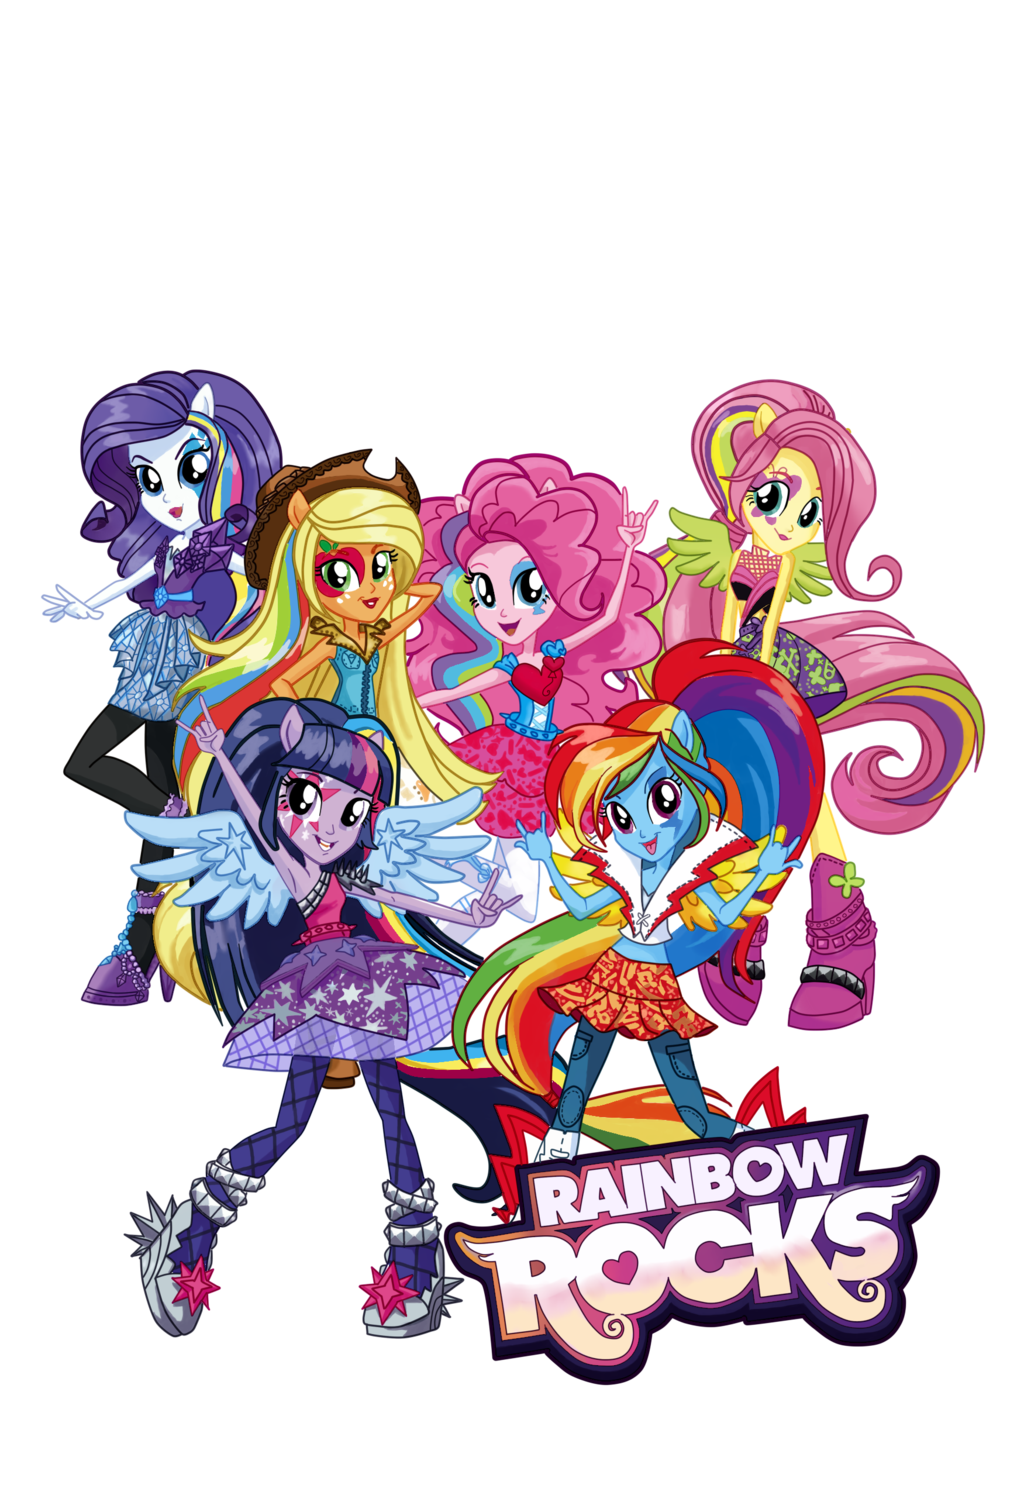 510 My Little Pony Equestria Girls: Rainbow Rocks Stock Photos